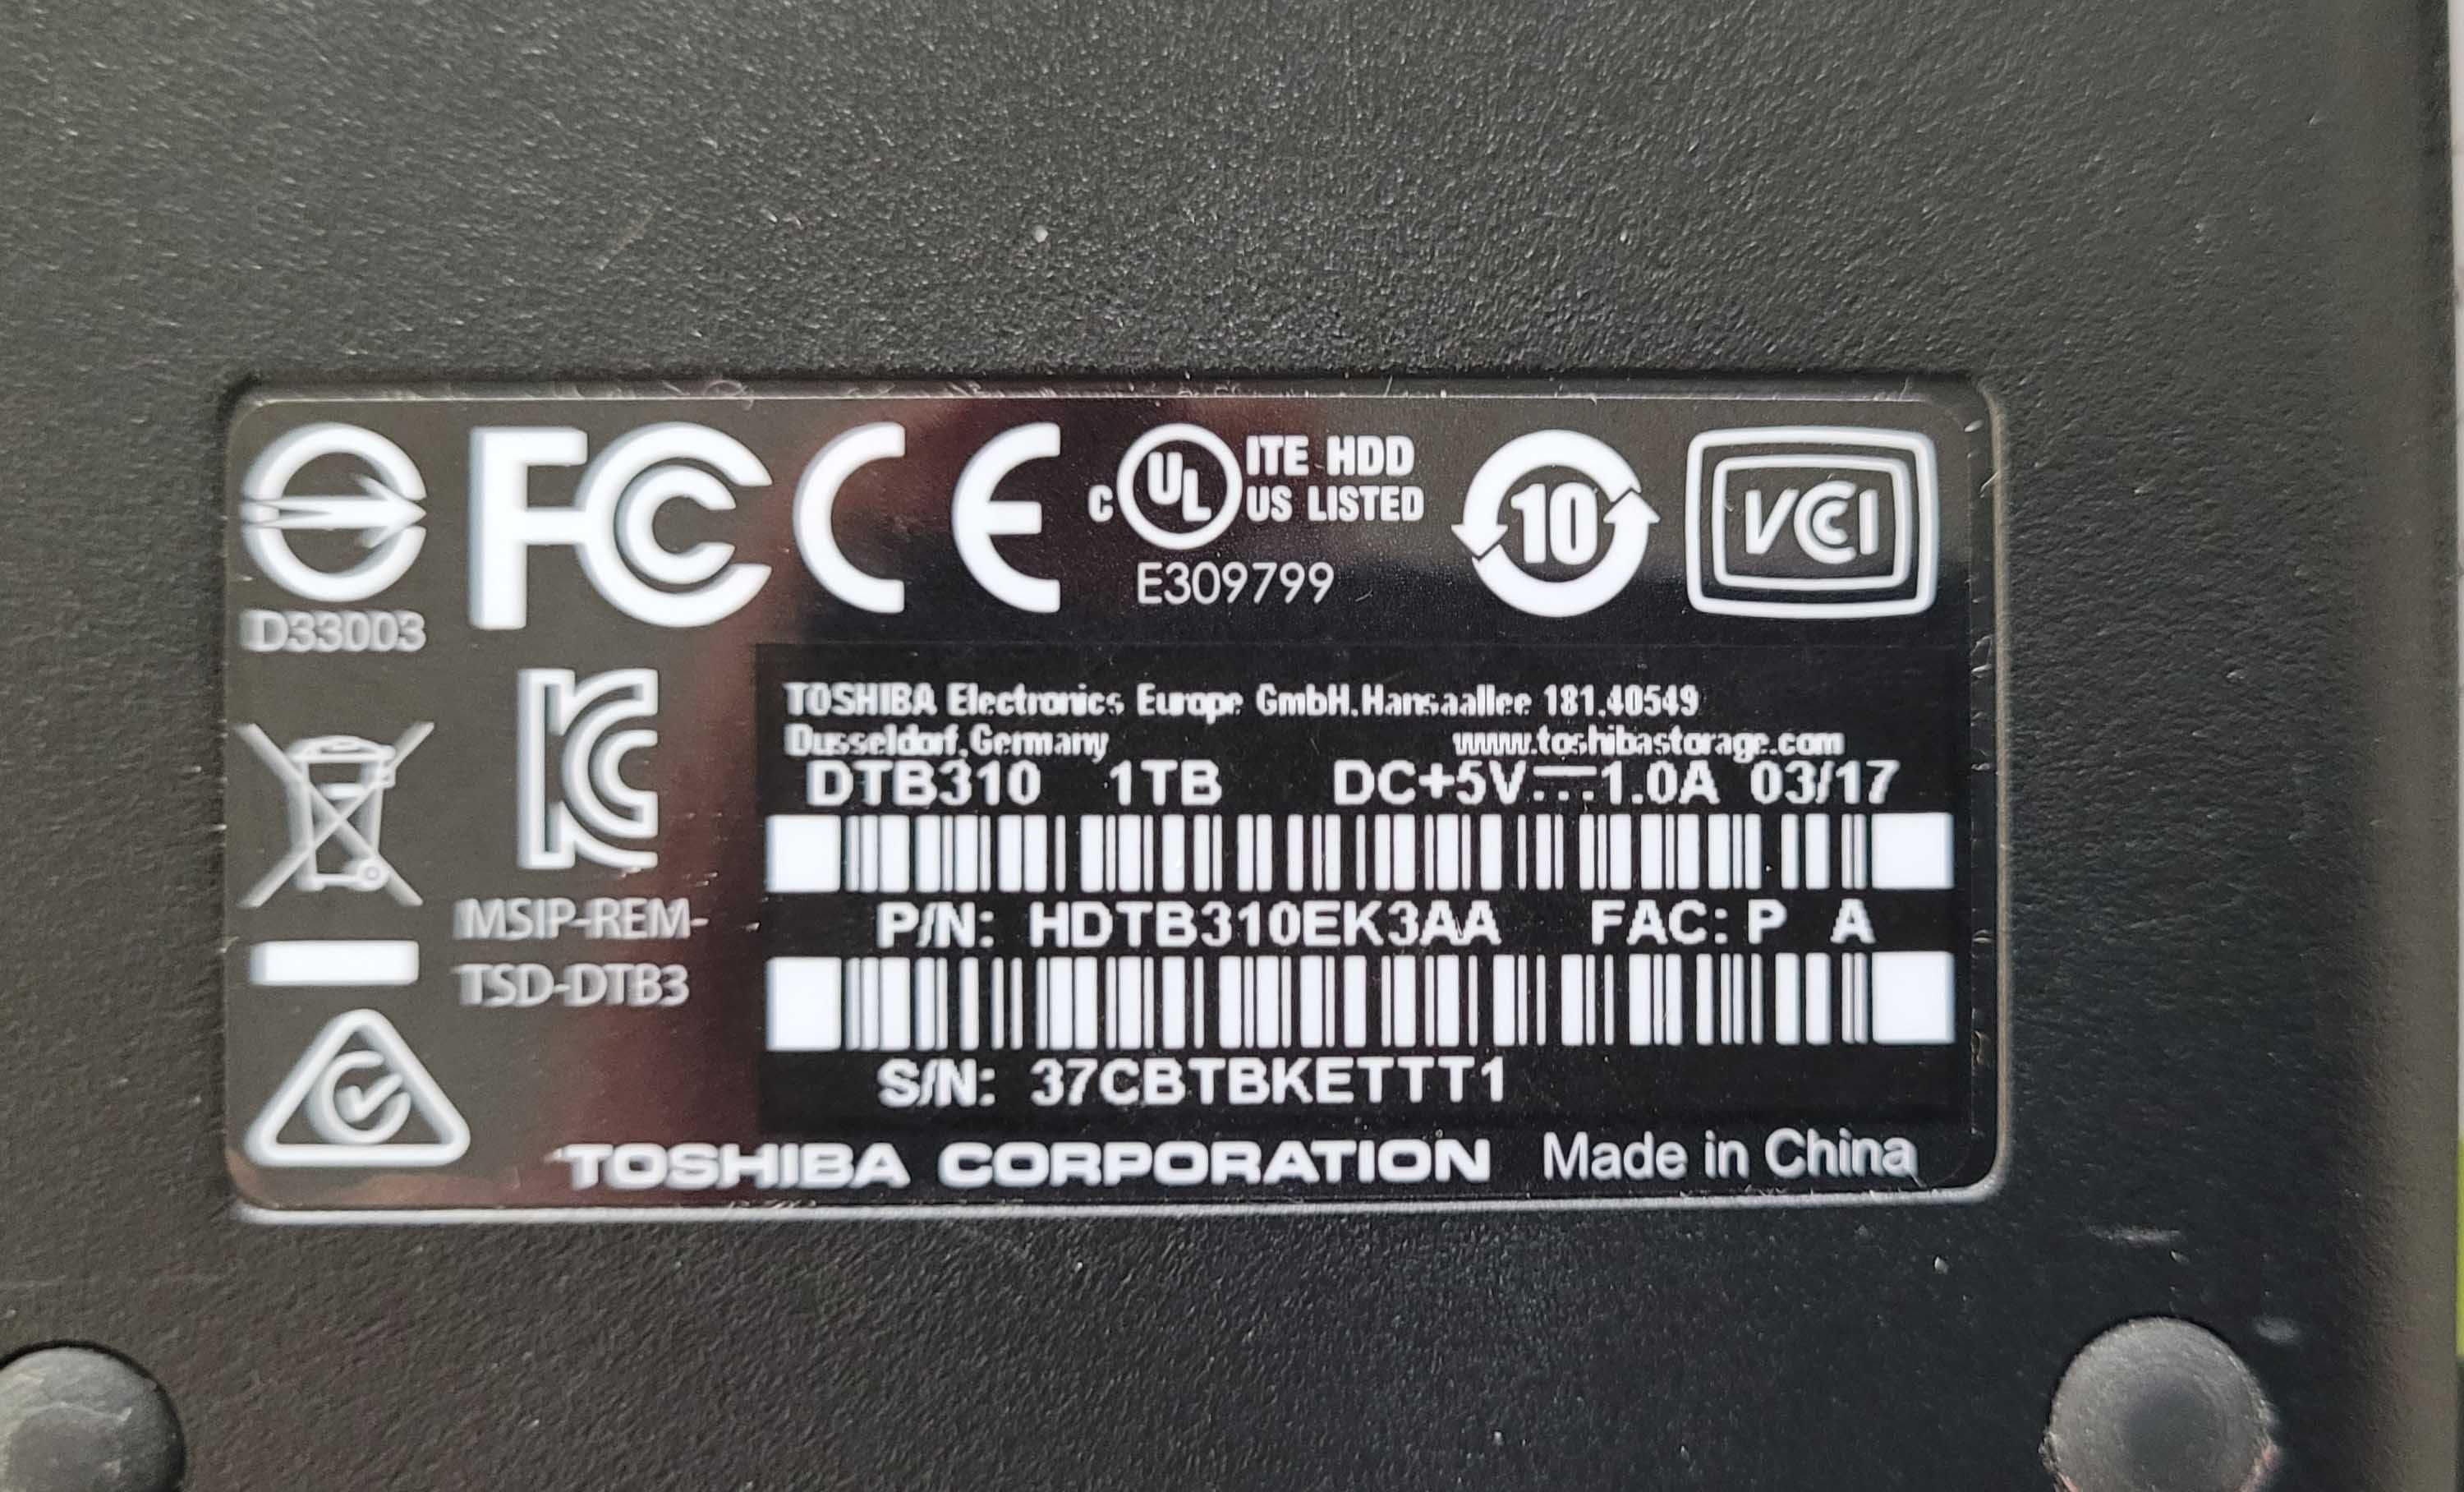 Disco Externo Toshiba Canvio Basics 1TB 2.5 USB 3.0 Preto